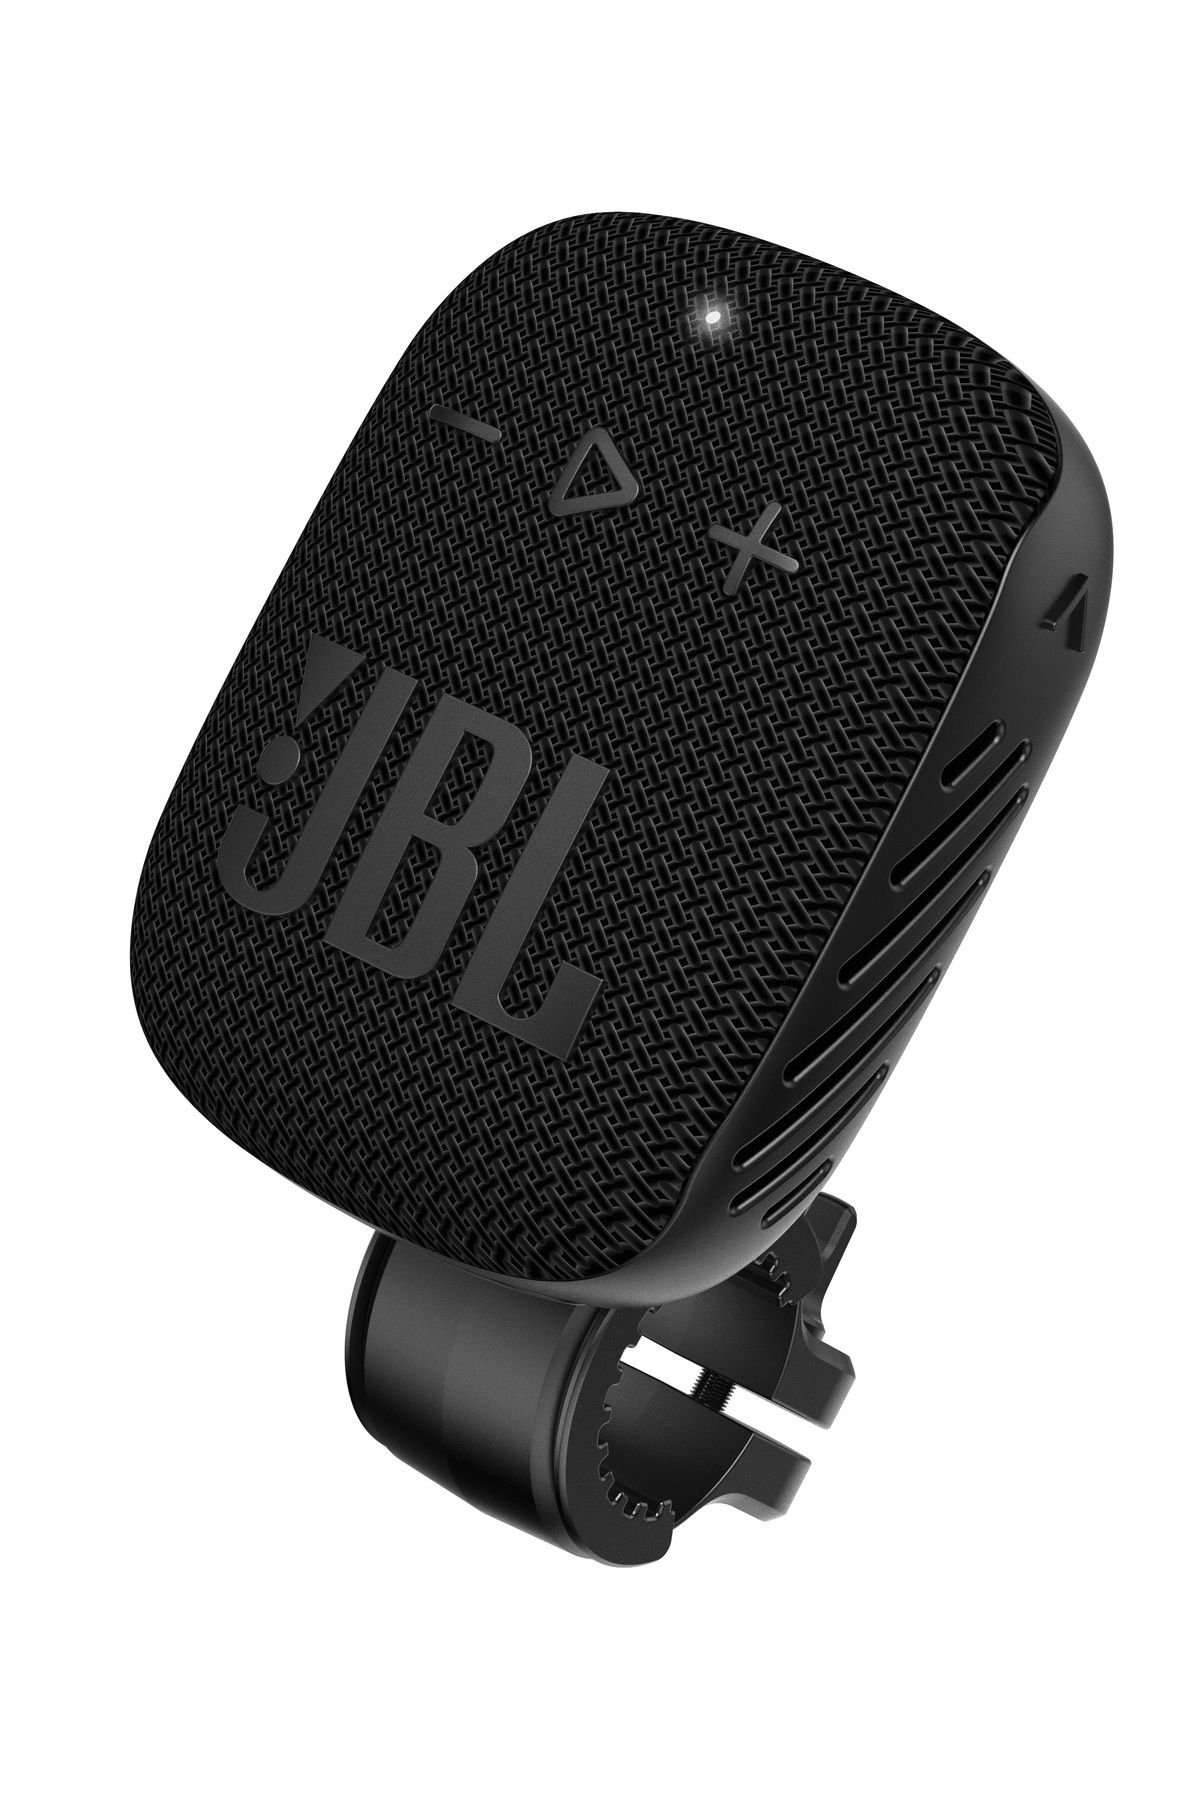 JBL Resmi Distribütör Garantili WIND3 Slim taşınabilir bisiklet scooter hoparlörü 2 Yıl 10+ Saat Siyah